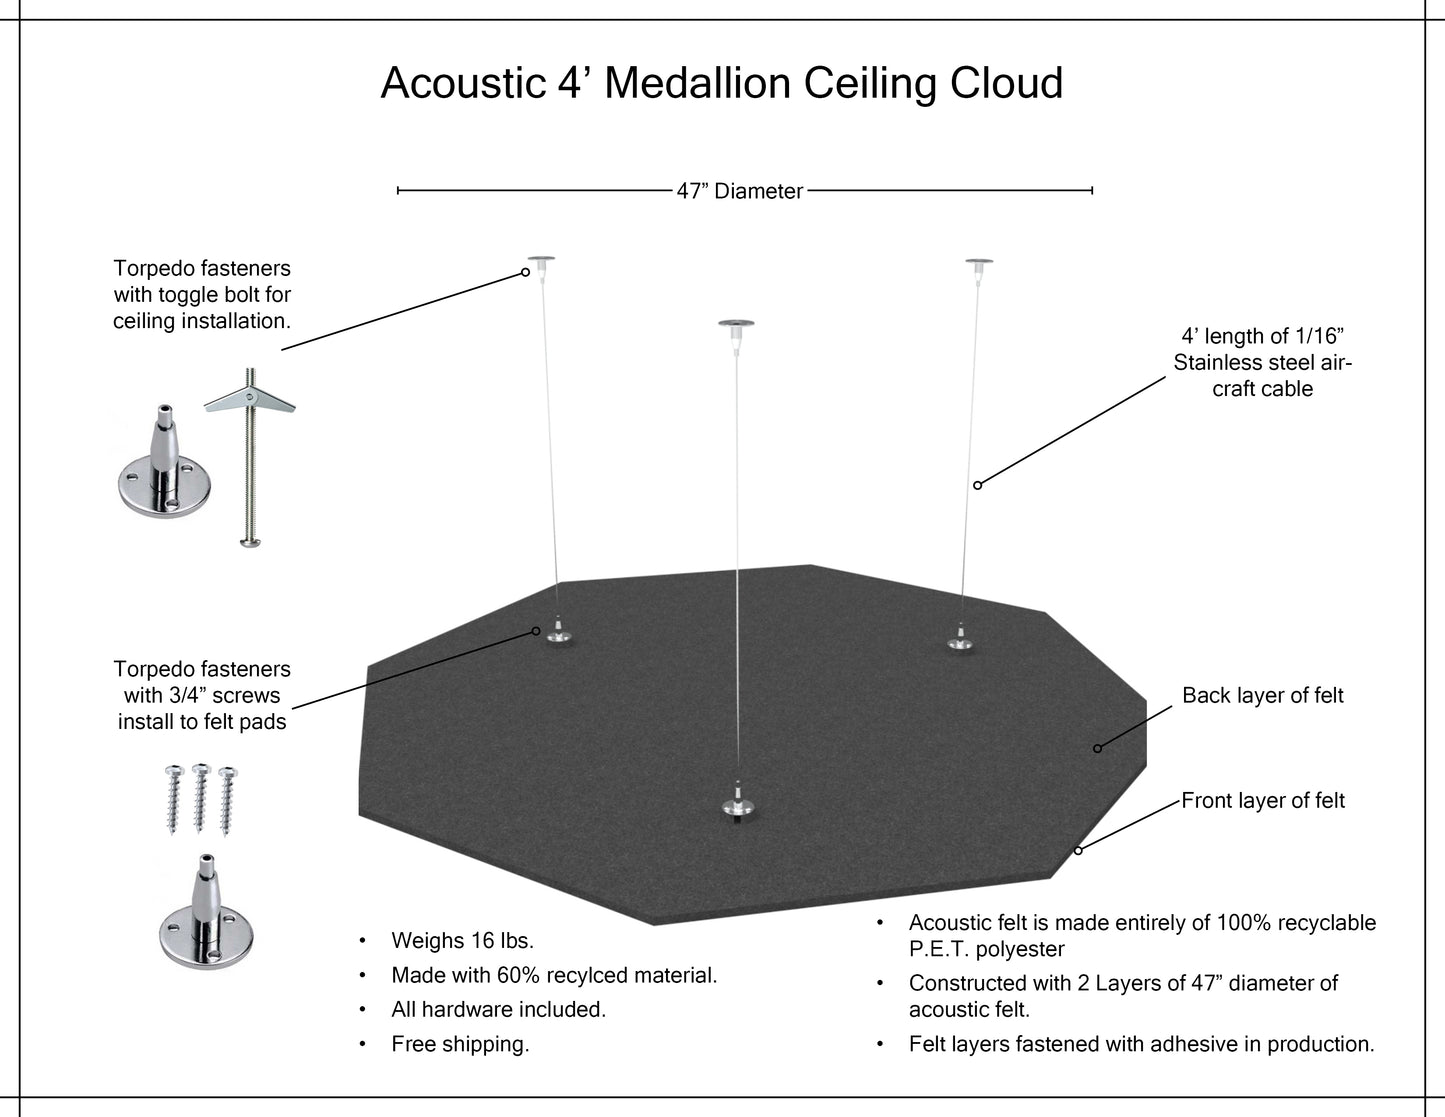 Medallion Acoustic Ceiling Cloud - Solar